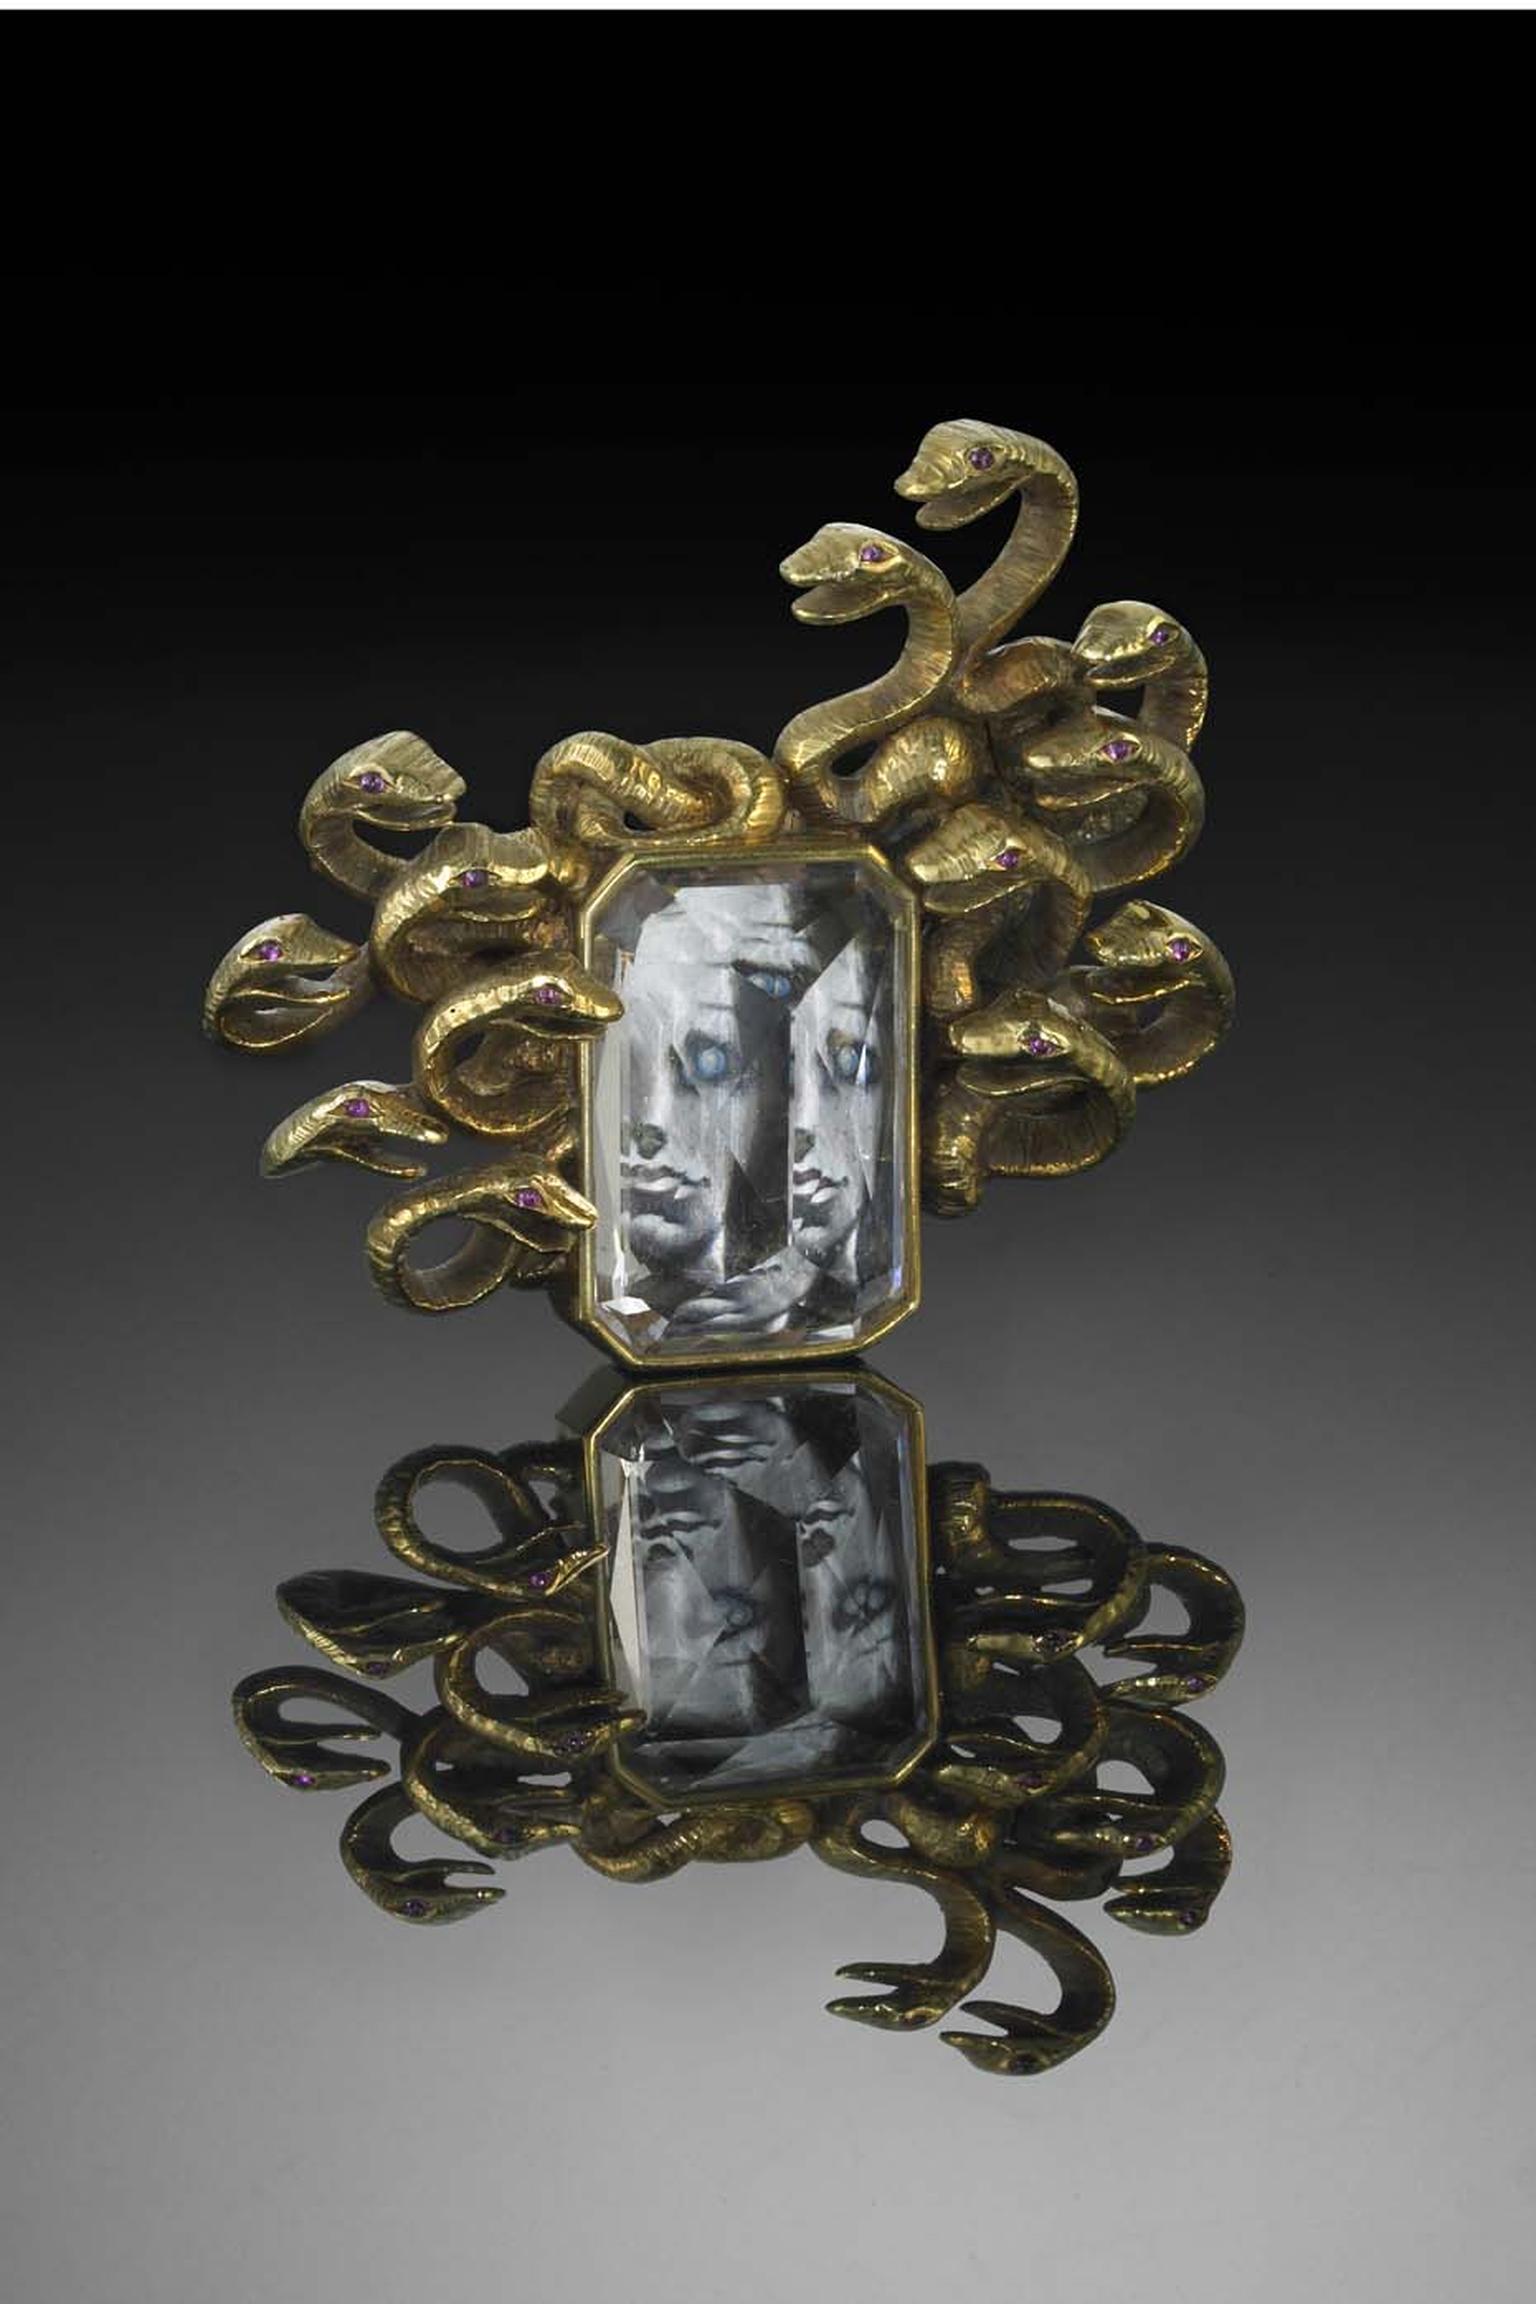 Verdura and Salvador Dali's 1941 Medusa collaboration: a gold, morganite and ruby brooch framing a miniature painting of Medusa.